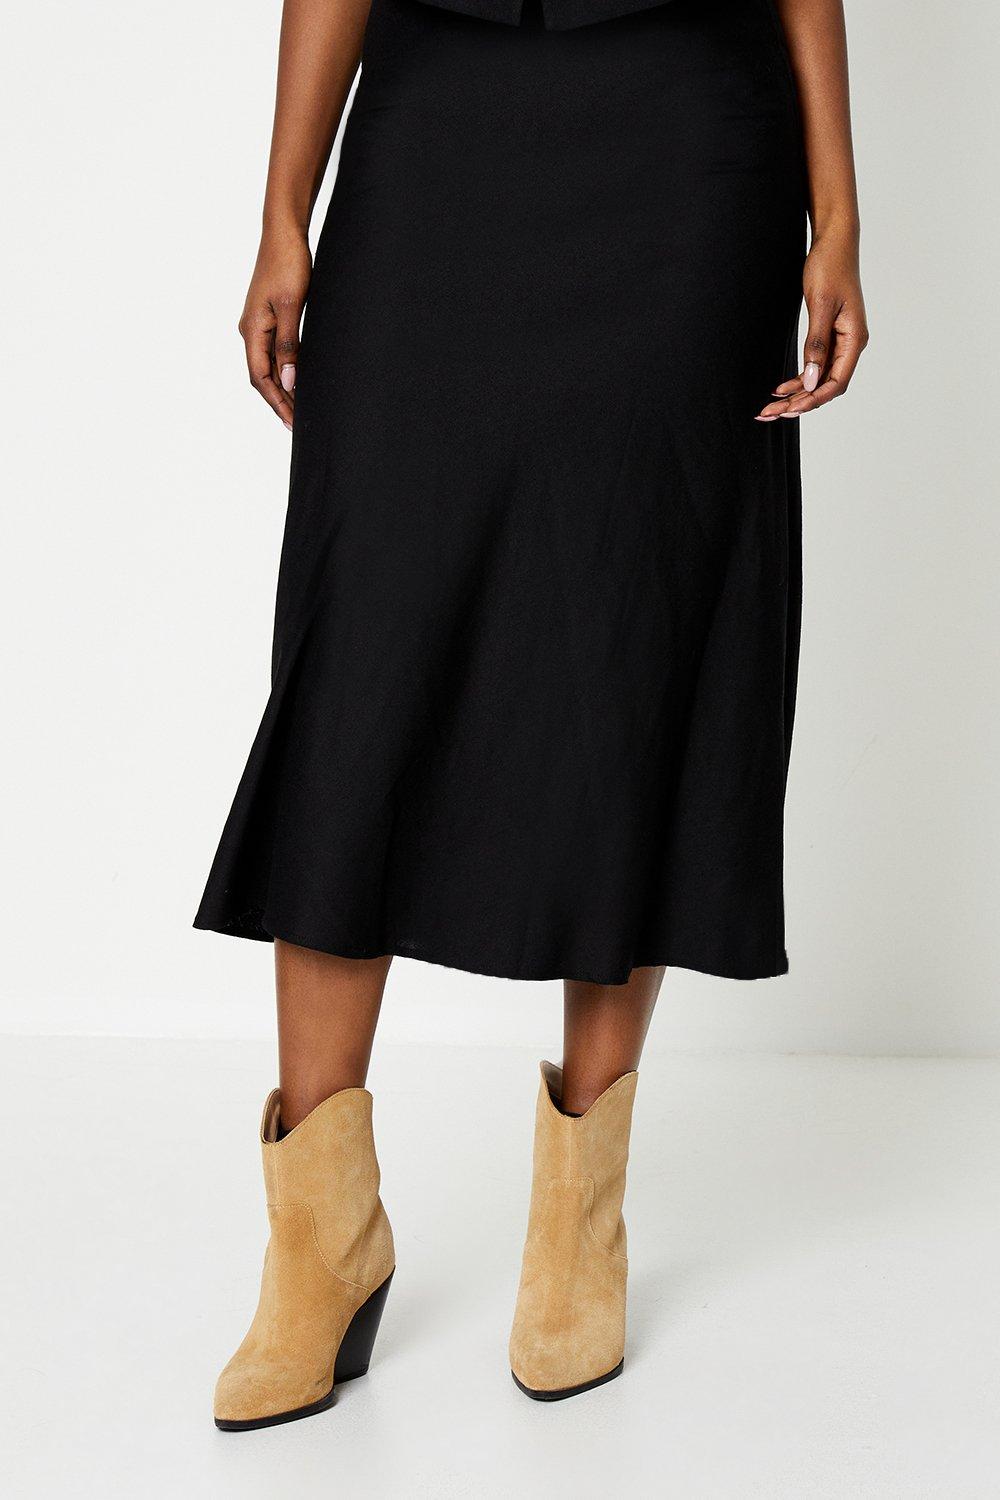 Women’s Linen Look Bias Cut Midi Skirt - black - 14